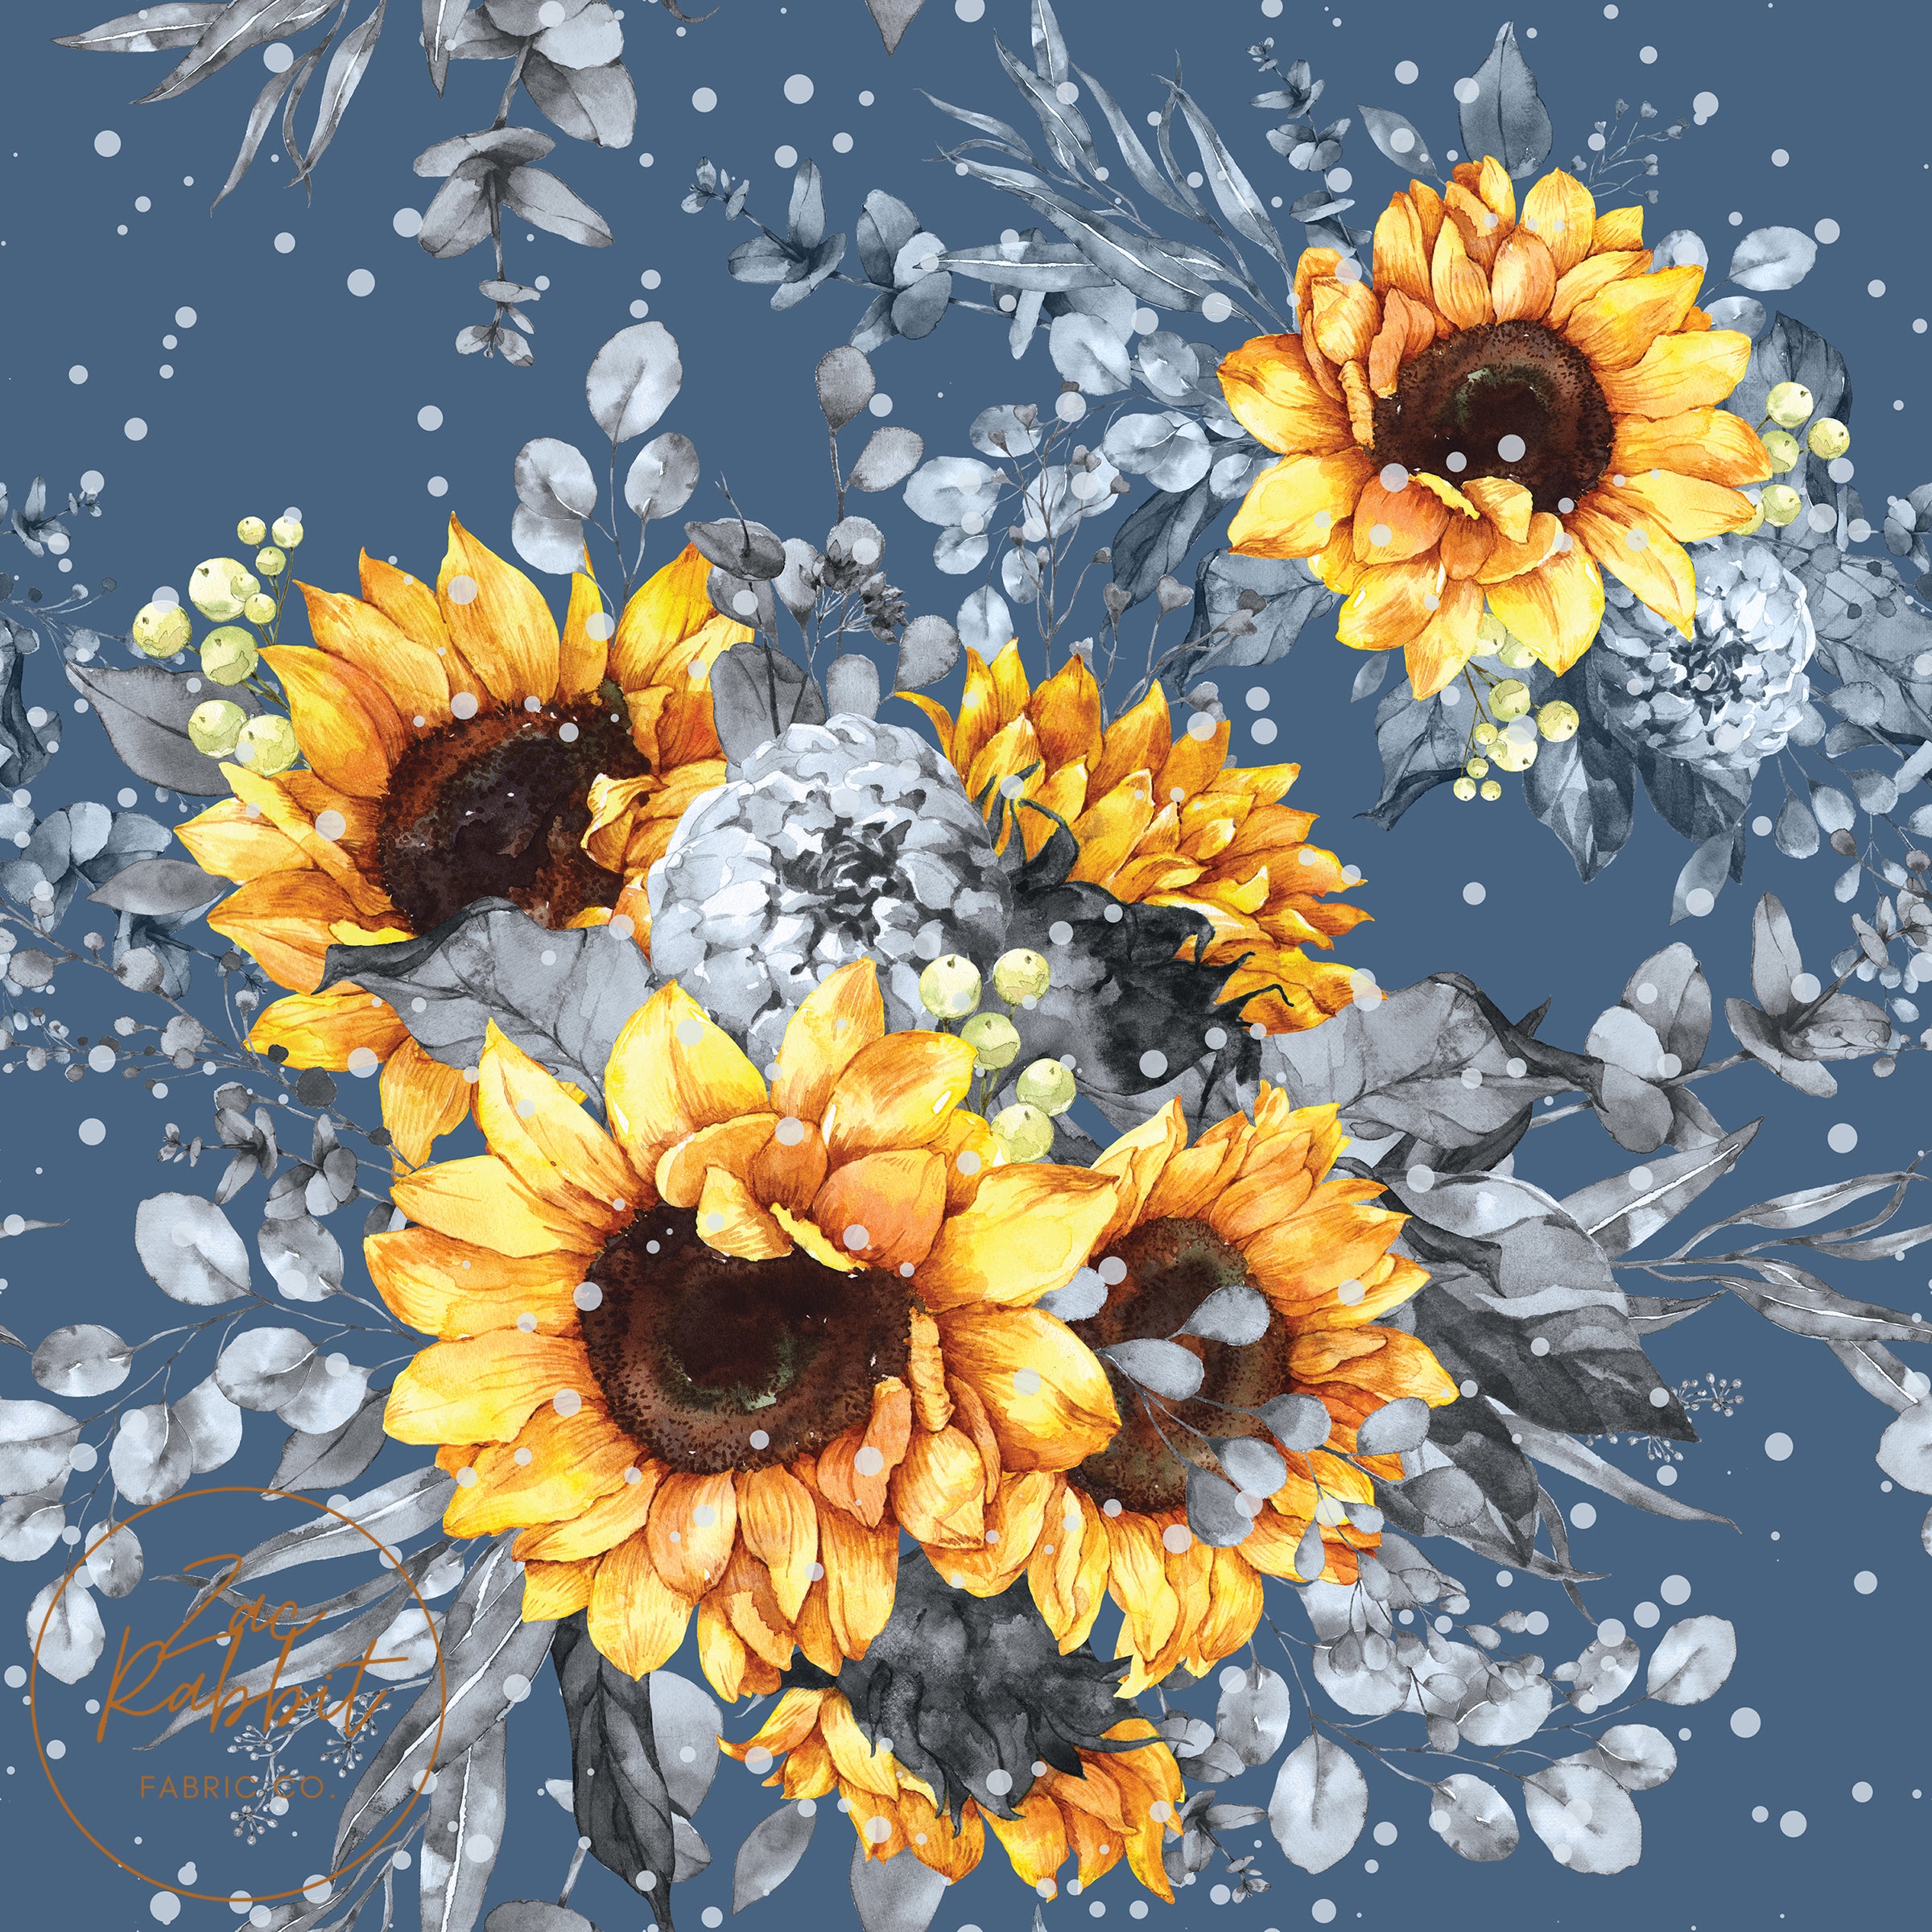 Blue Sunflowers